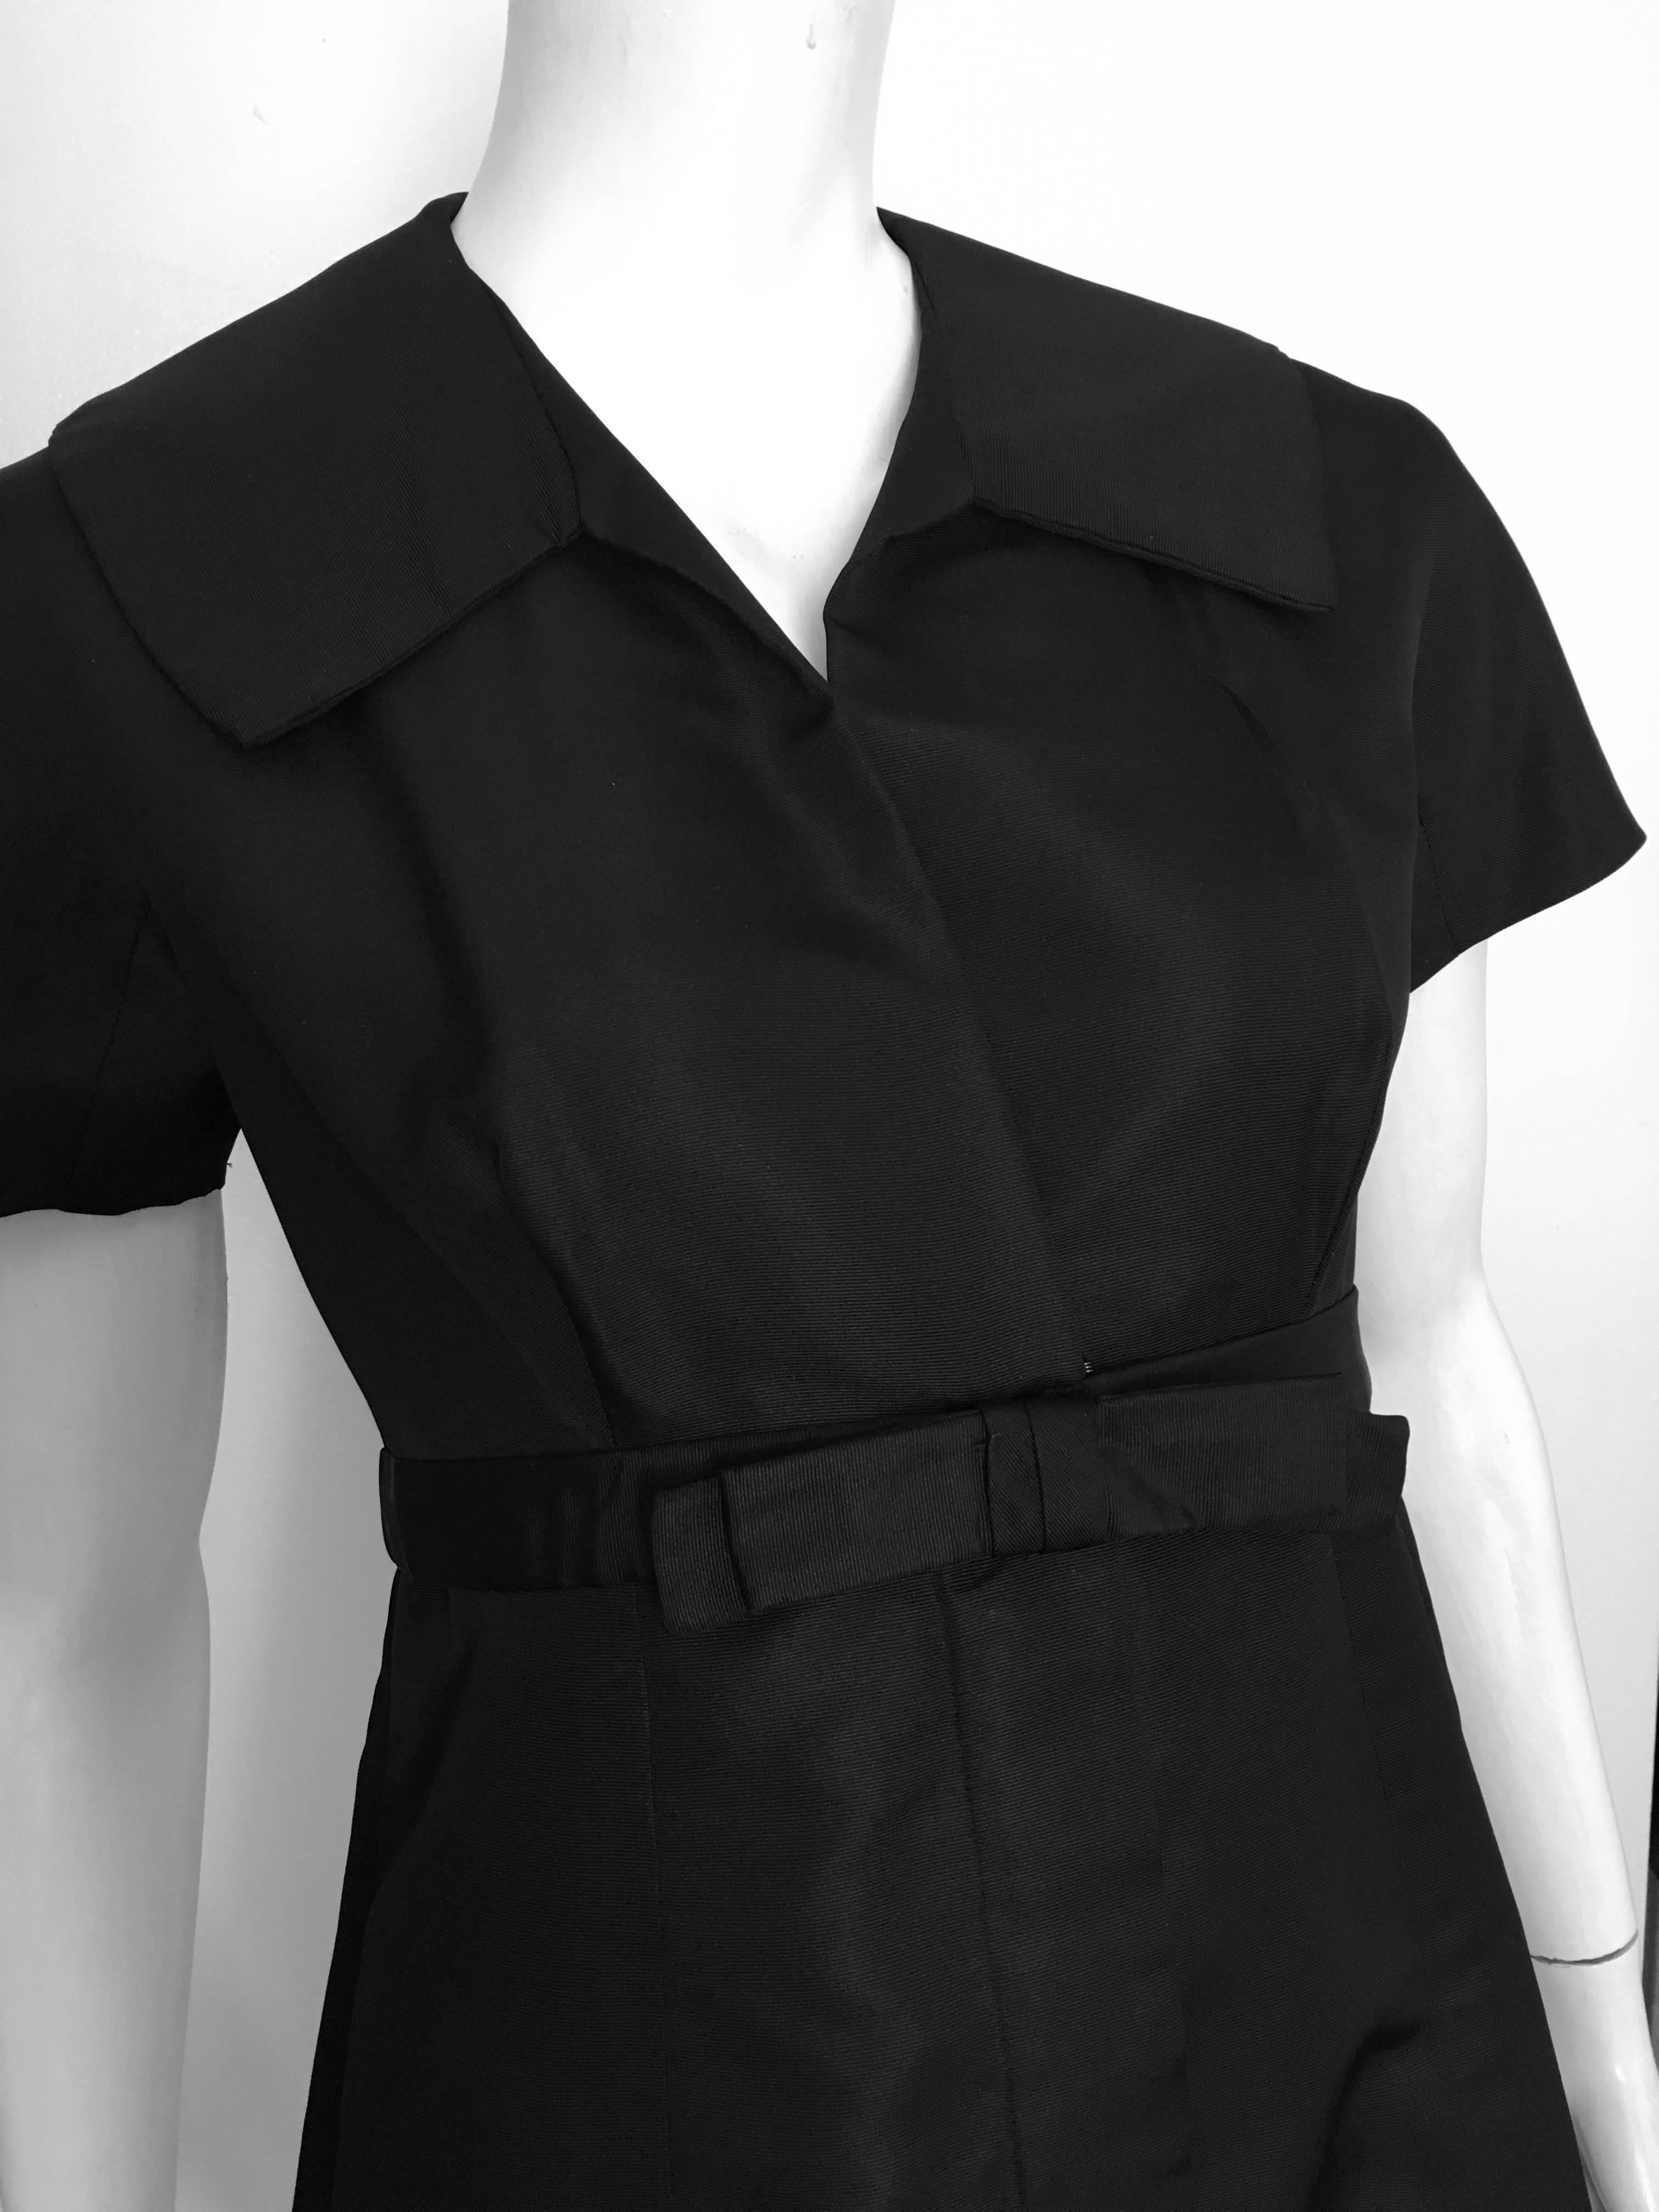 Malcolm Charles Black Silk Taffeta Dress Size 6. For Sale 1